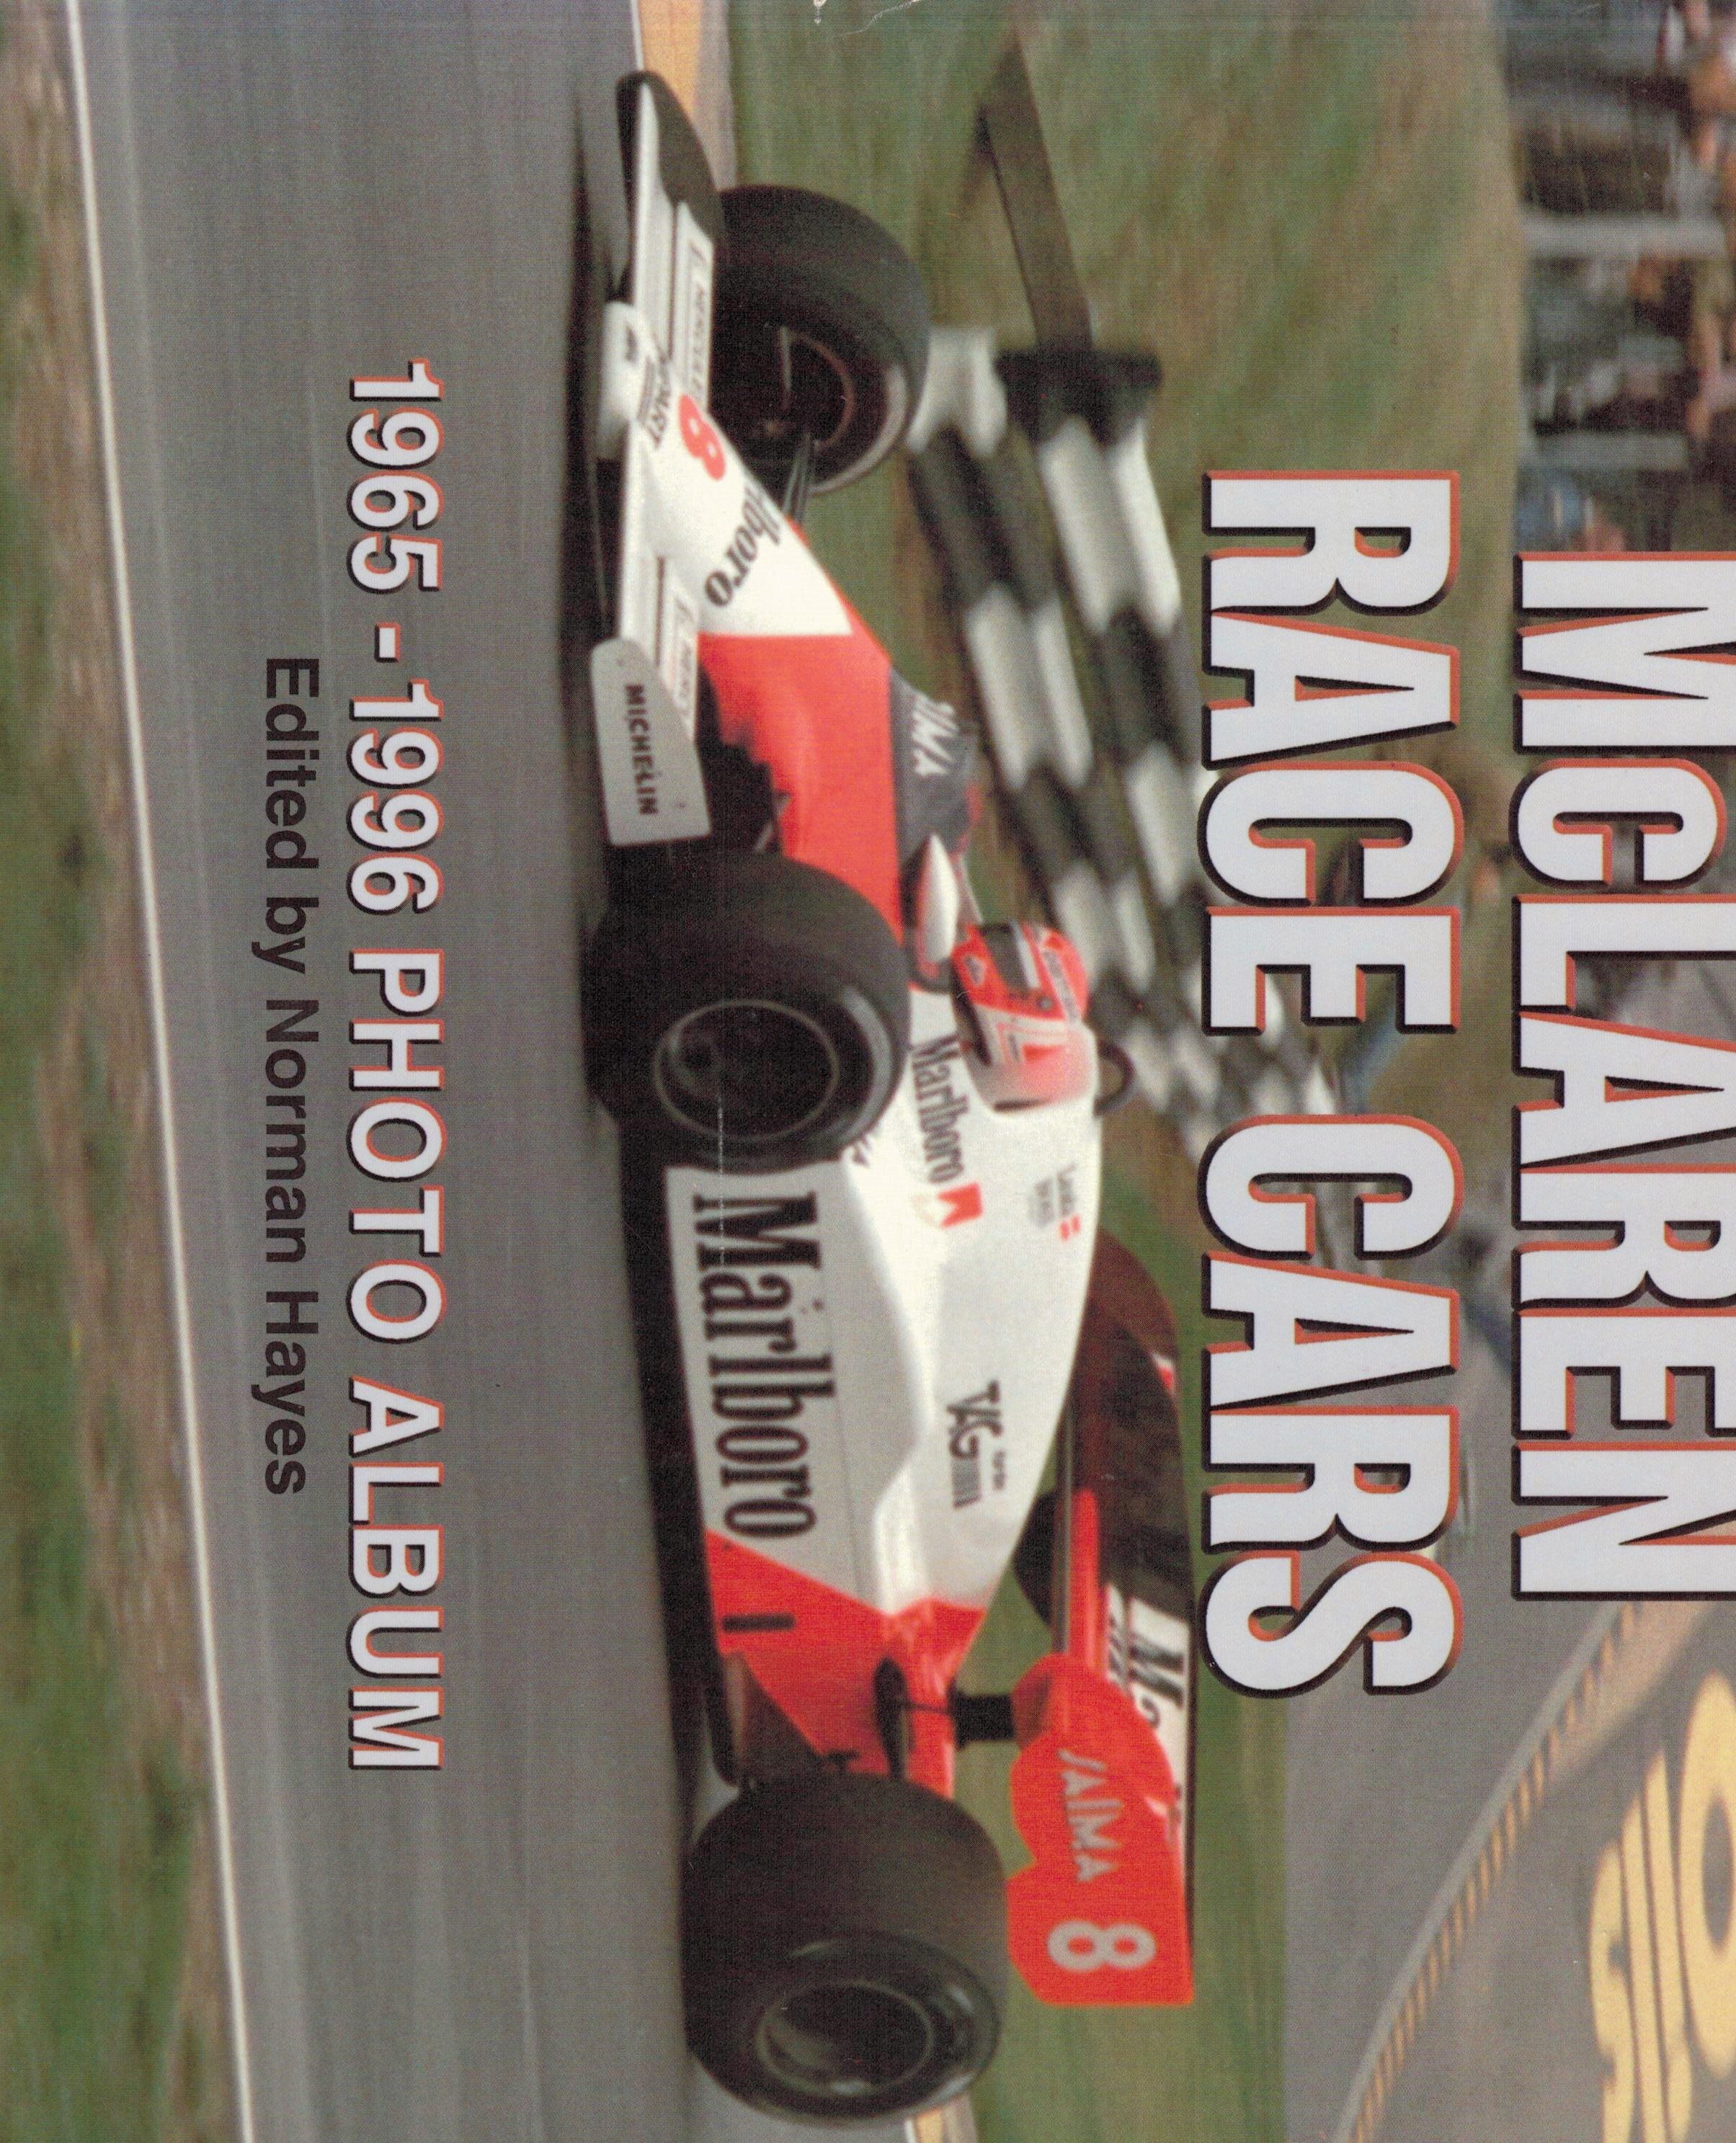 MCLAREN RACE CARS 1965-1966 PHOTO ALBUM